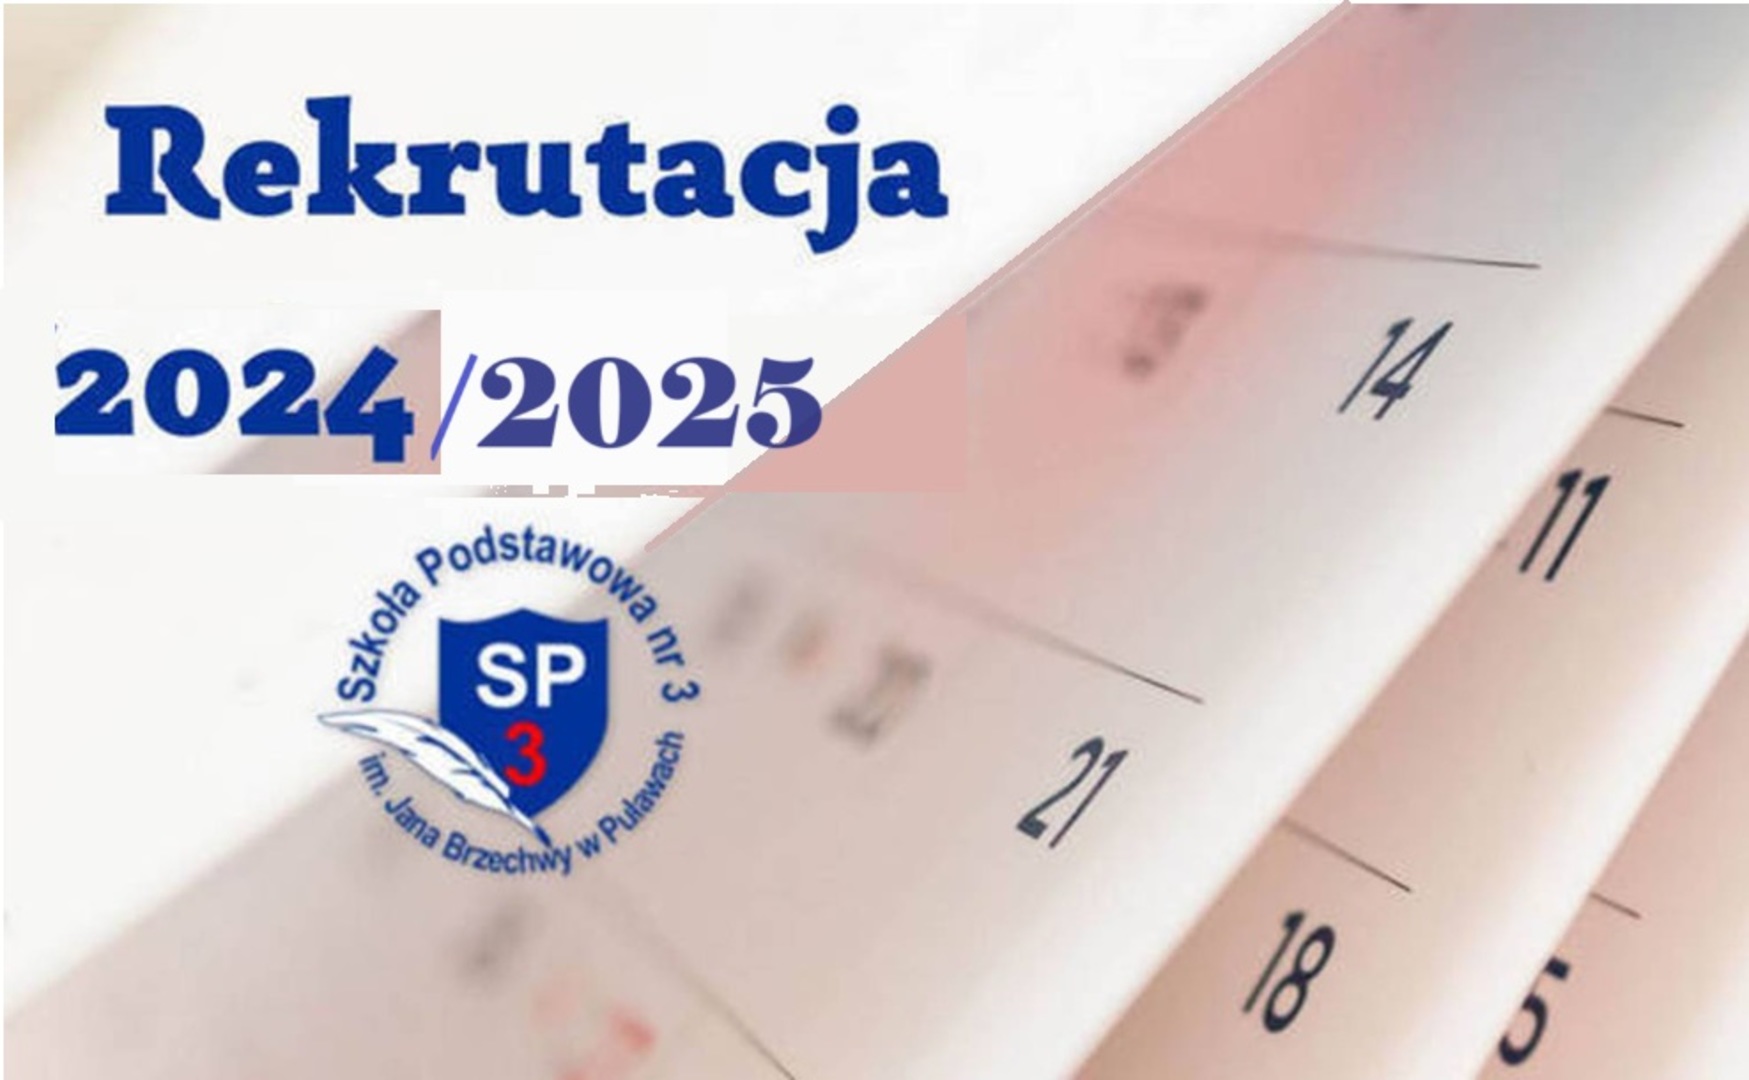 Plakat z napisem Rekrutacja i podanym rokiem szkolnym 2024/2025